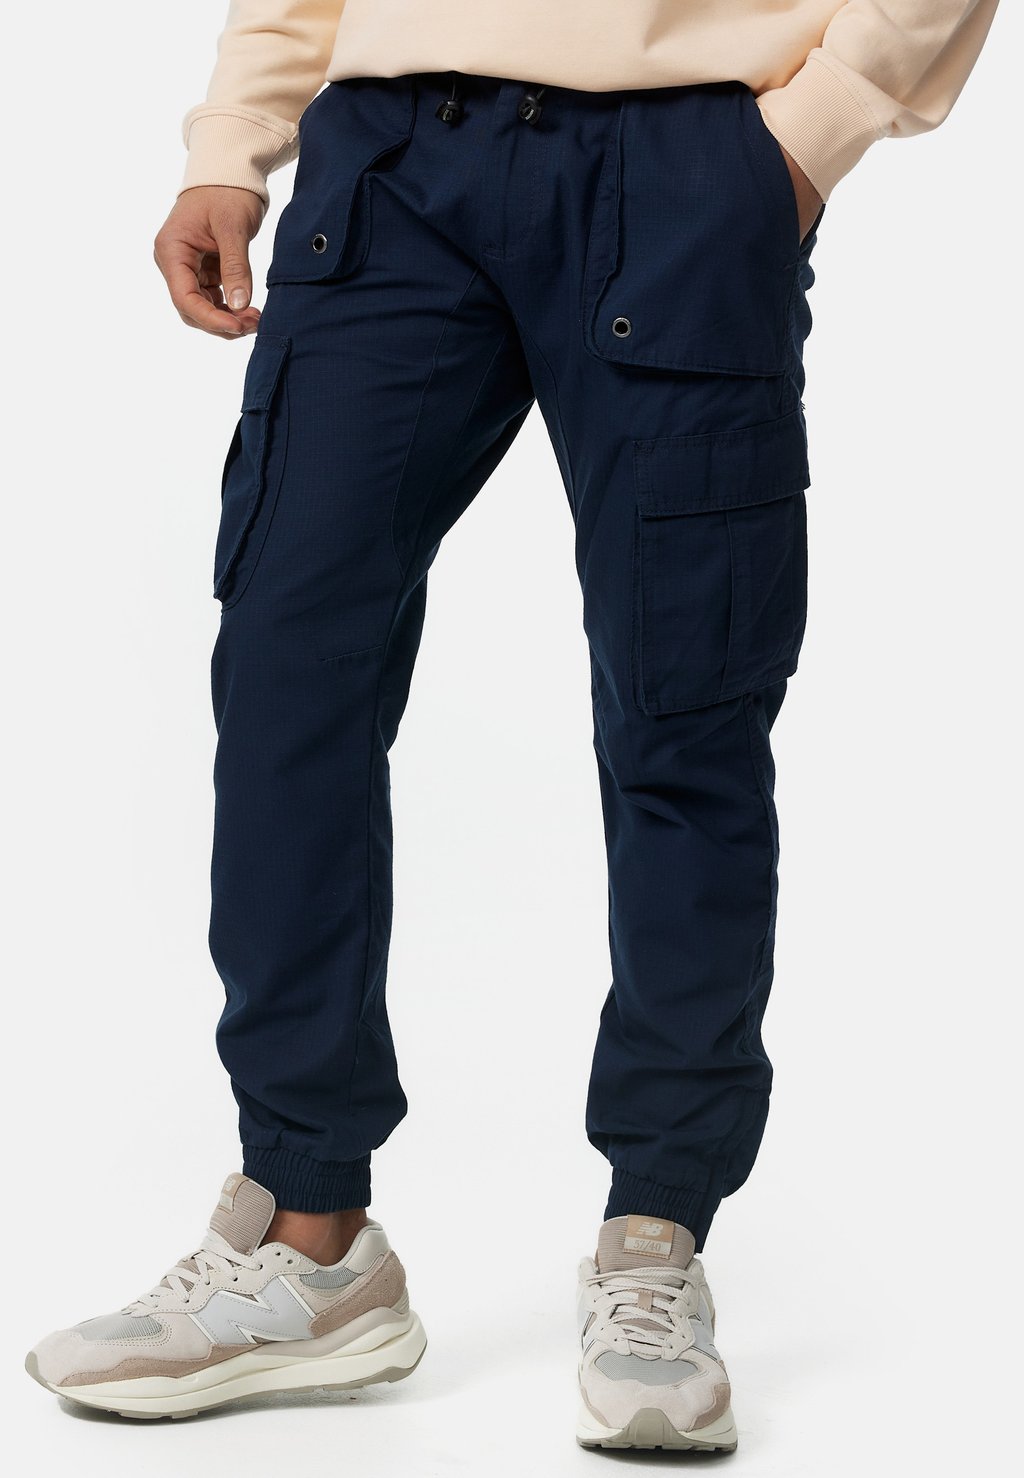 Брюки-карго INDICODE JEANS, цвет navy брюки для бега idhultop indicode jeans цвет navy